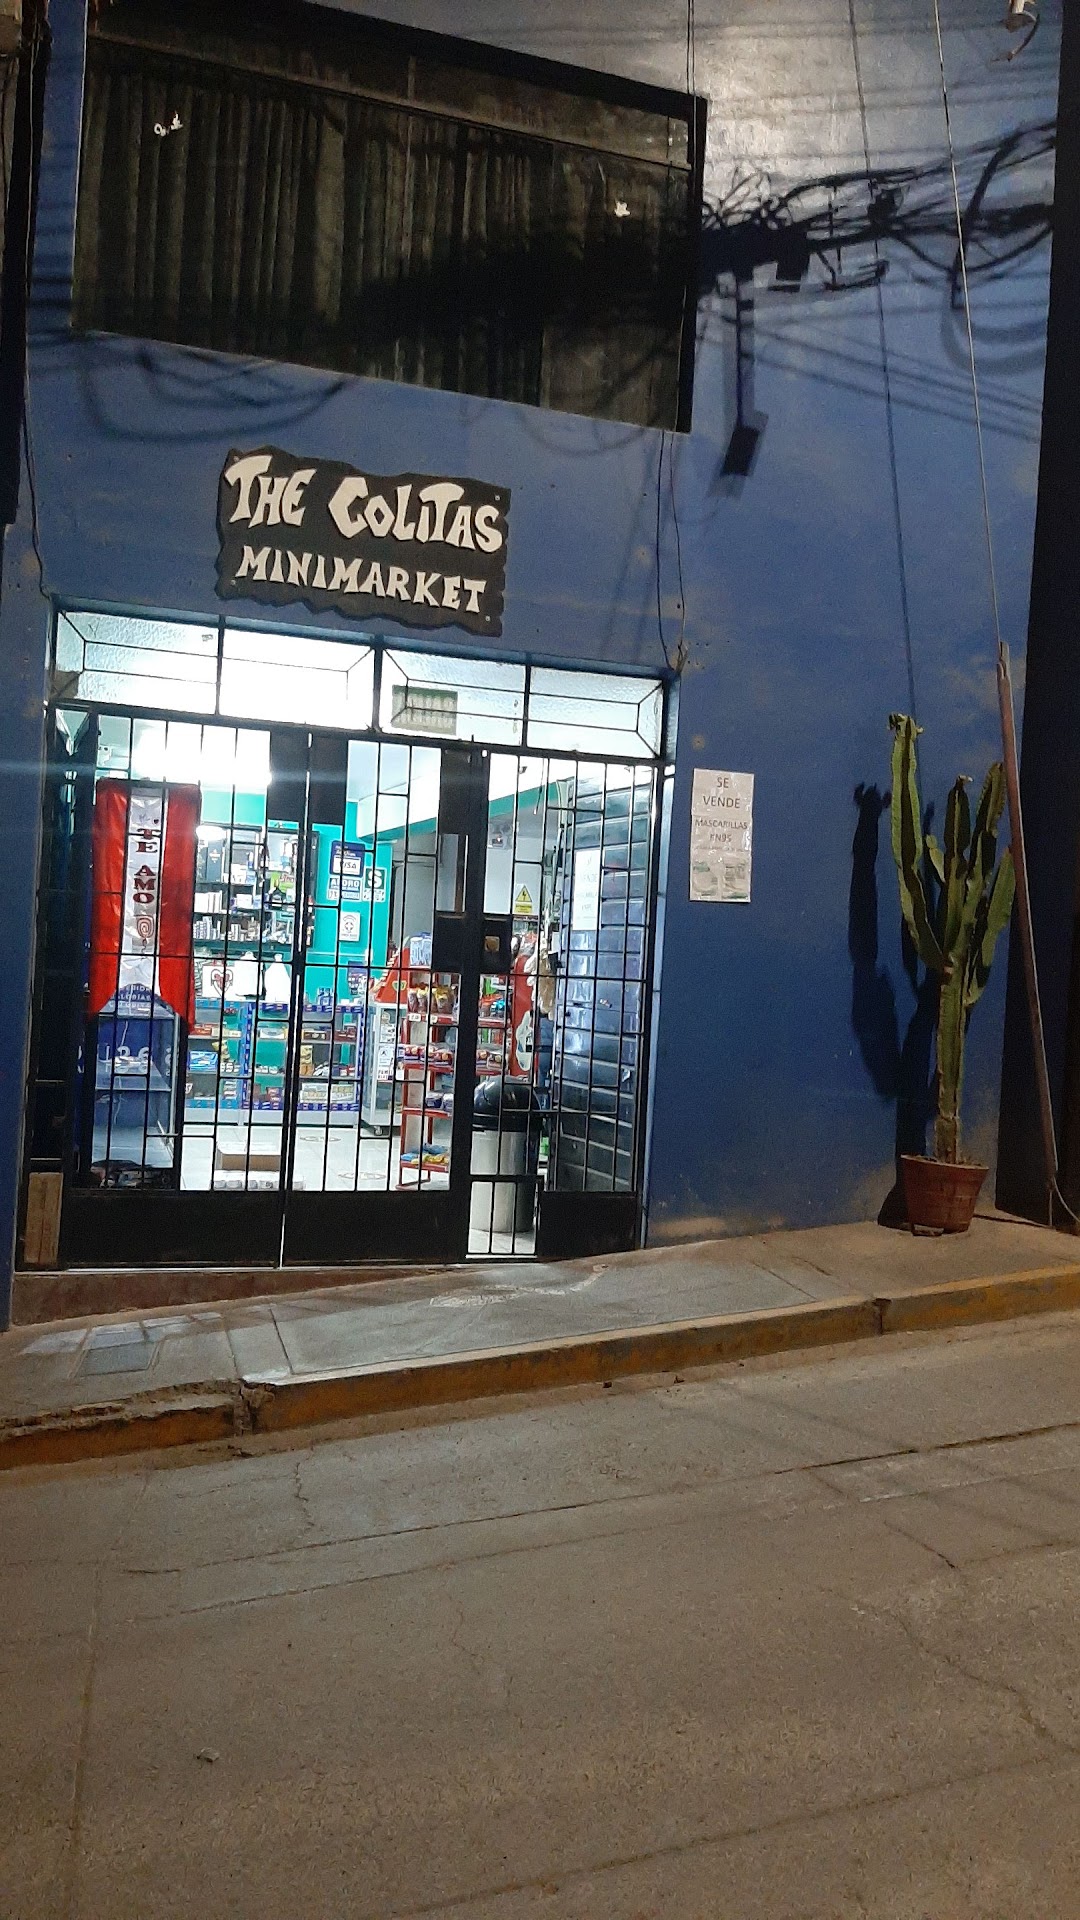 Minimarket The Colitas